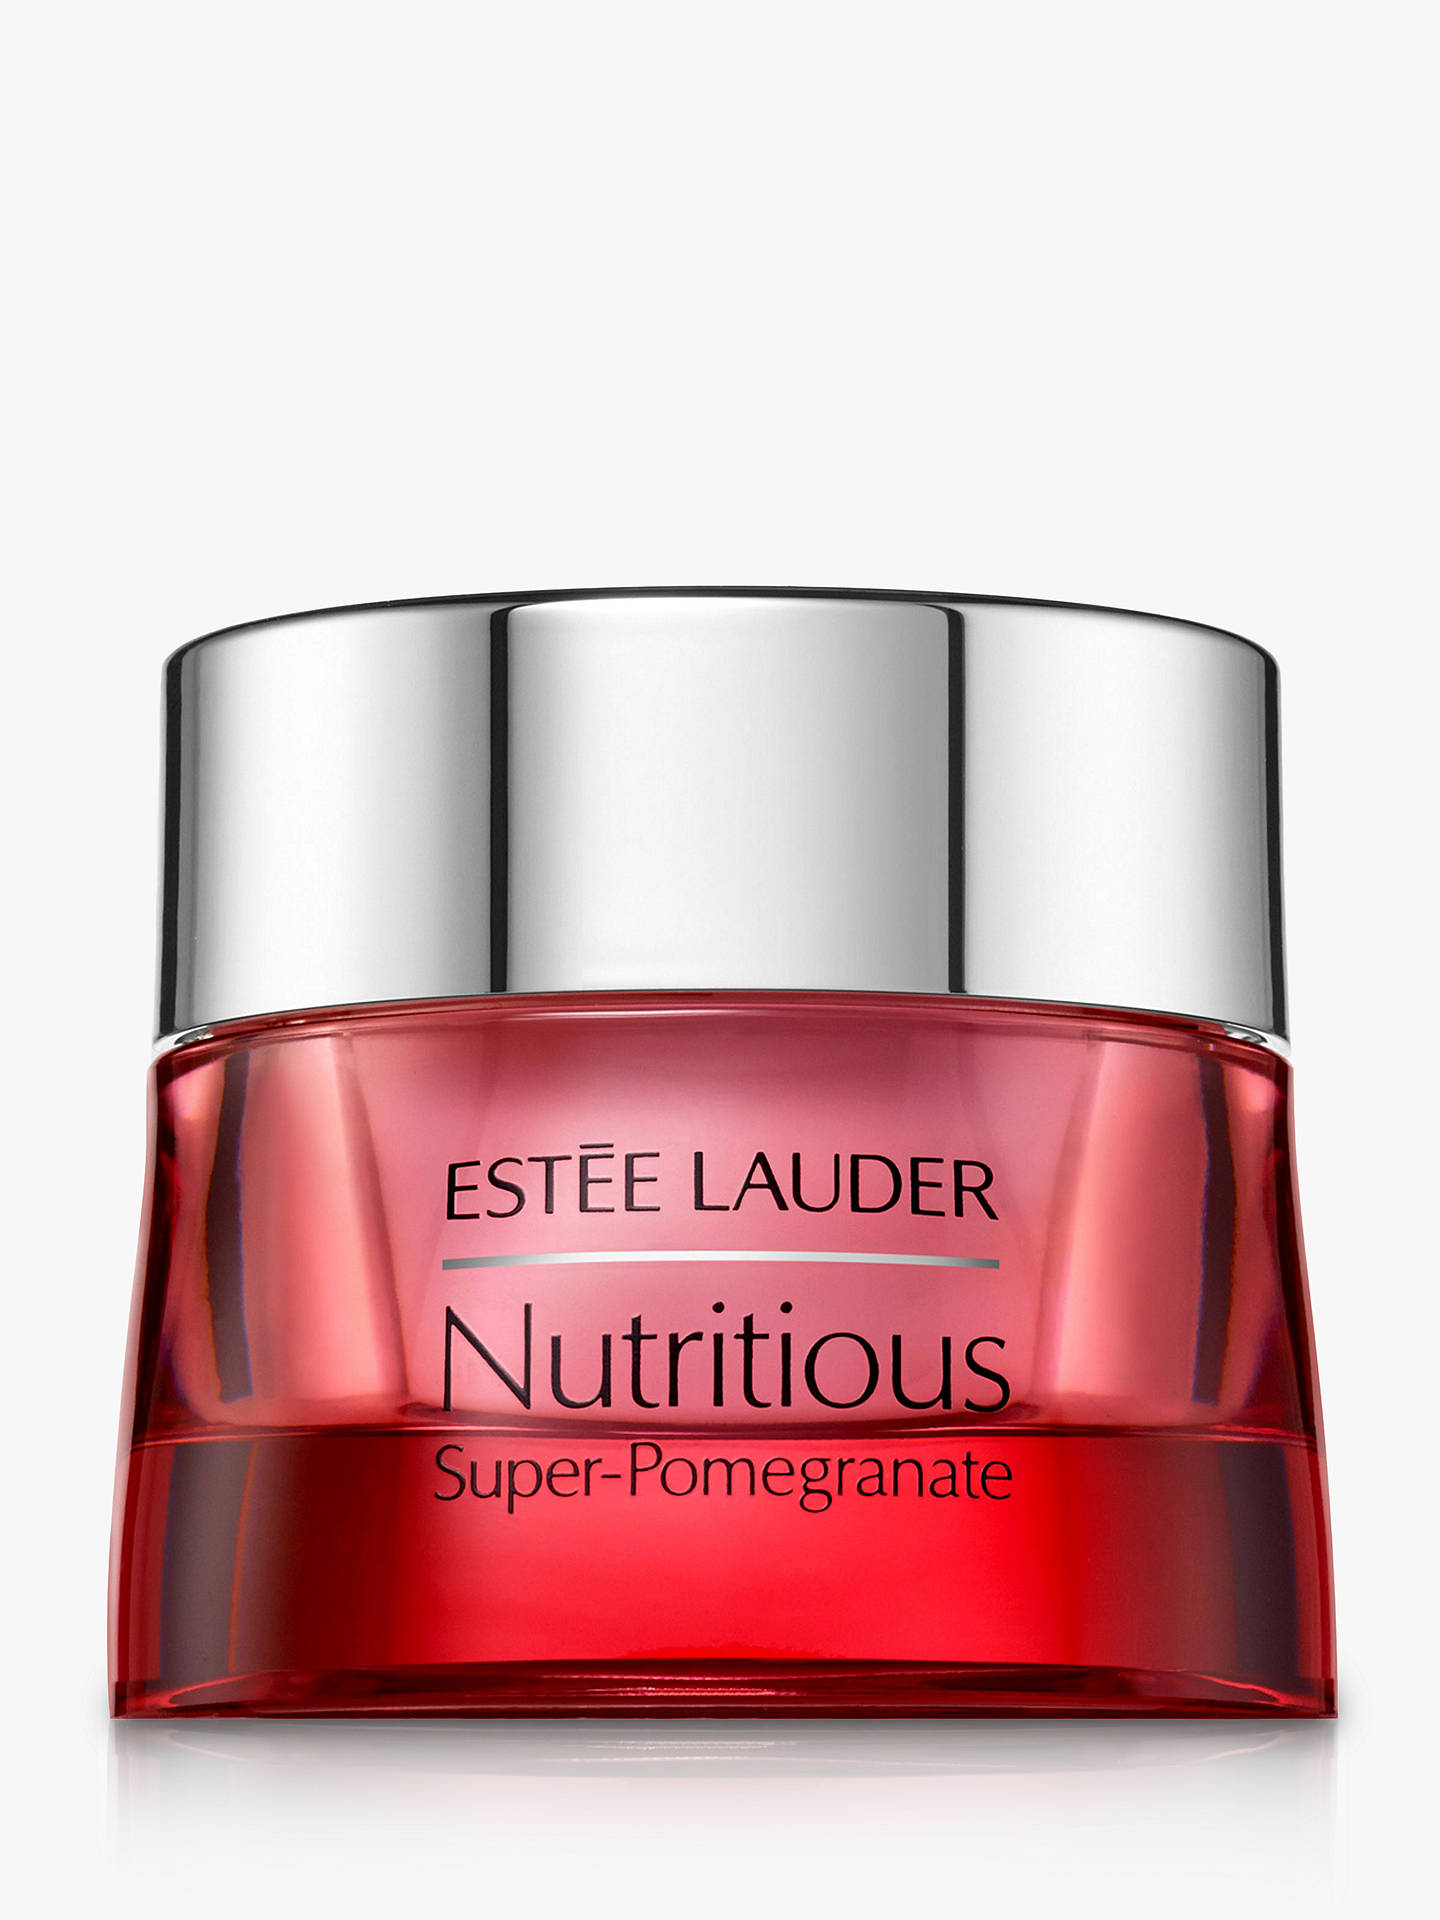 à¸à¸¥à¸à¸²à¸£à¸à¹à¸à¸«à¸²à¸£à¸¹à¸à¸�à¸²à¸à¸ªà¸³à¸«à¸£à¸±à¸ ESTEE LAUDER Nutritious Super-Pomegranate Radiant Energy Eye Jelly 15 ml.